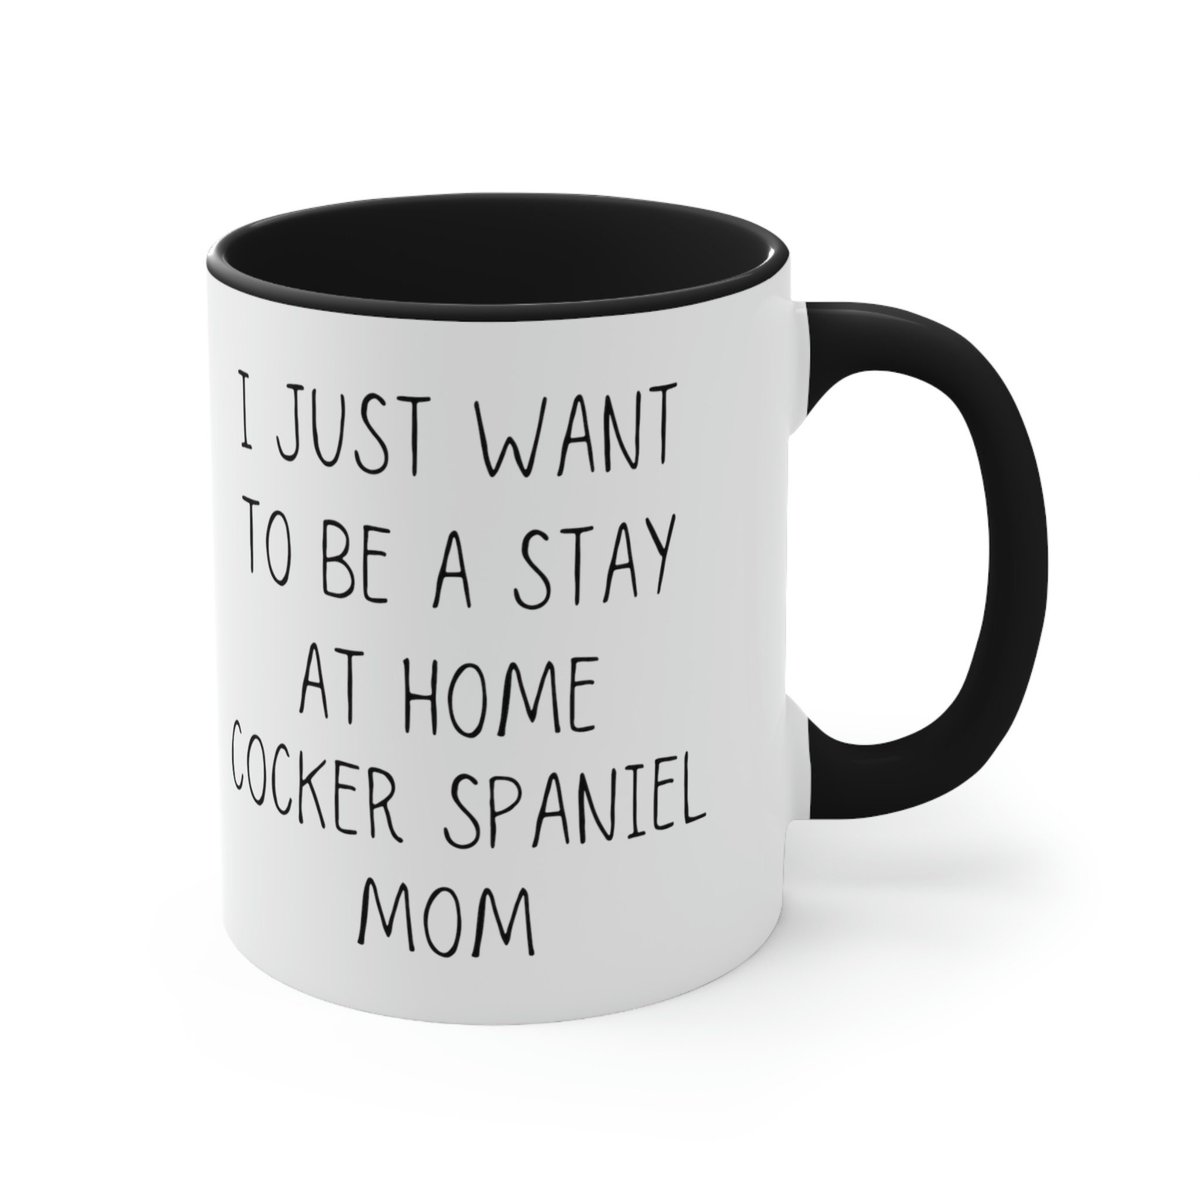 Funny Cocker Spaniel Mom Gift Mug #cockerspaniel #cockerspanieldog #cockerspanielgift #cockermothersday #spanielmothersday #cockerspanielgiftmug #cockerspanielmom CLICK HERE TO BUY NOW: etsy.me/3H1U3Ox